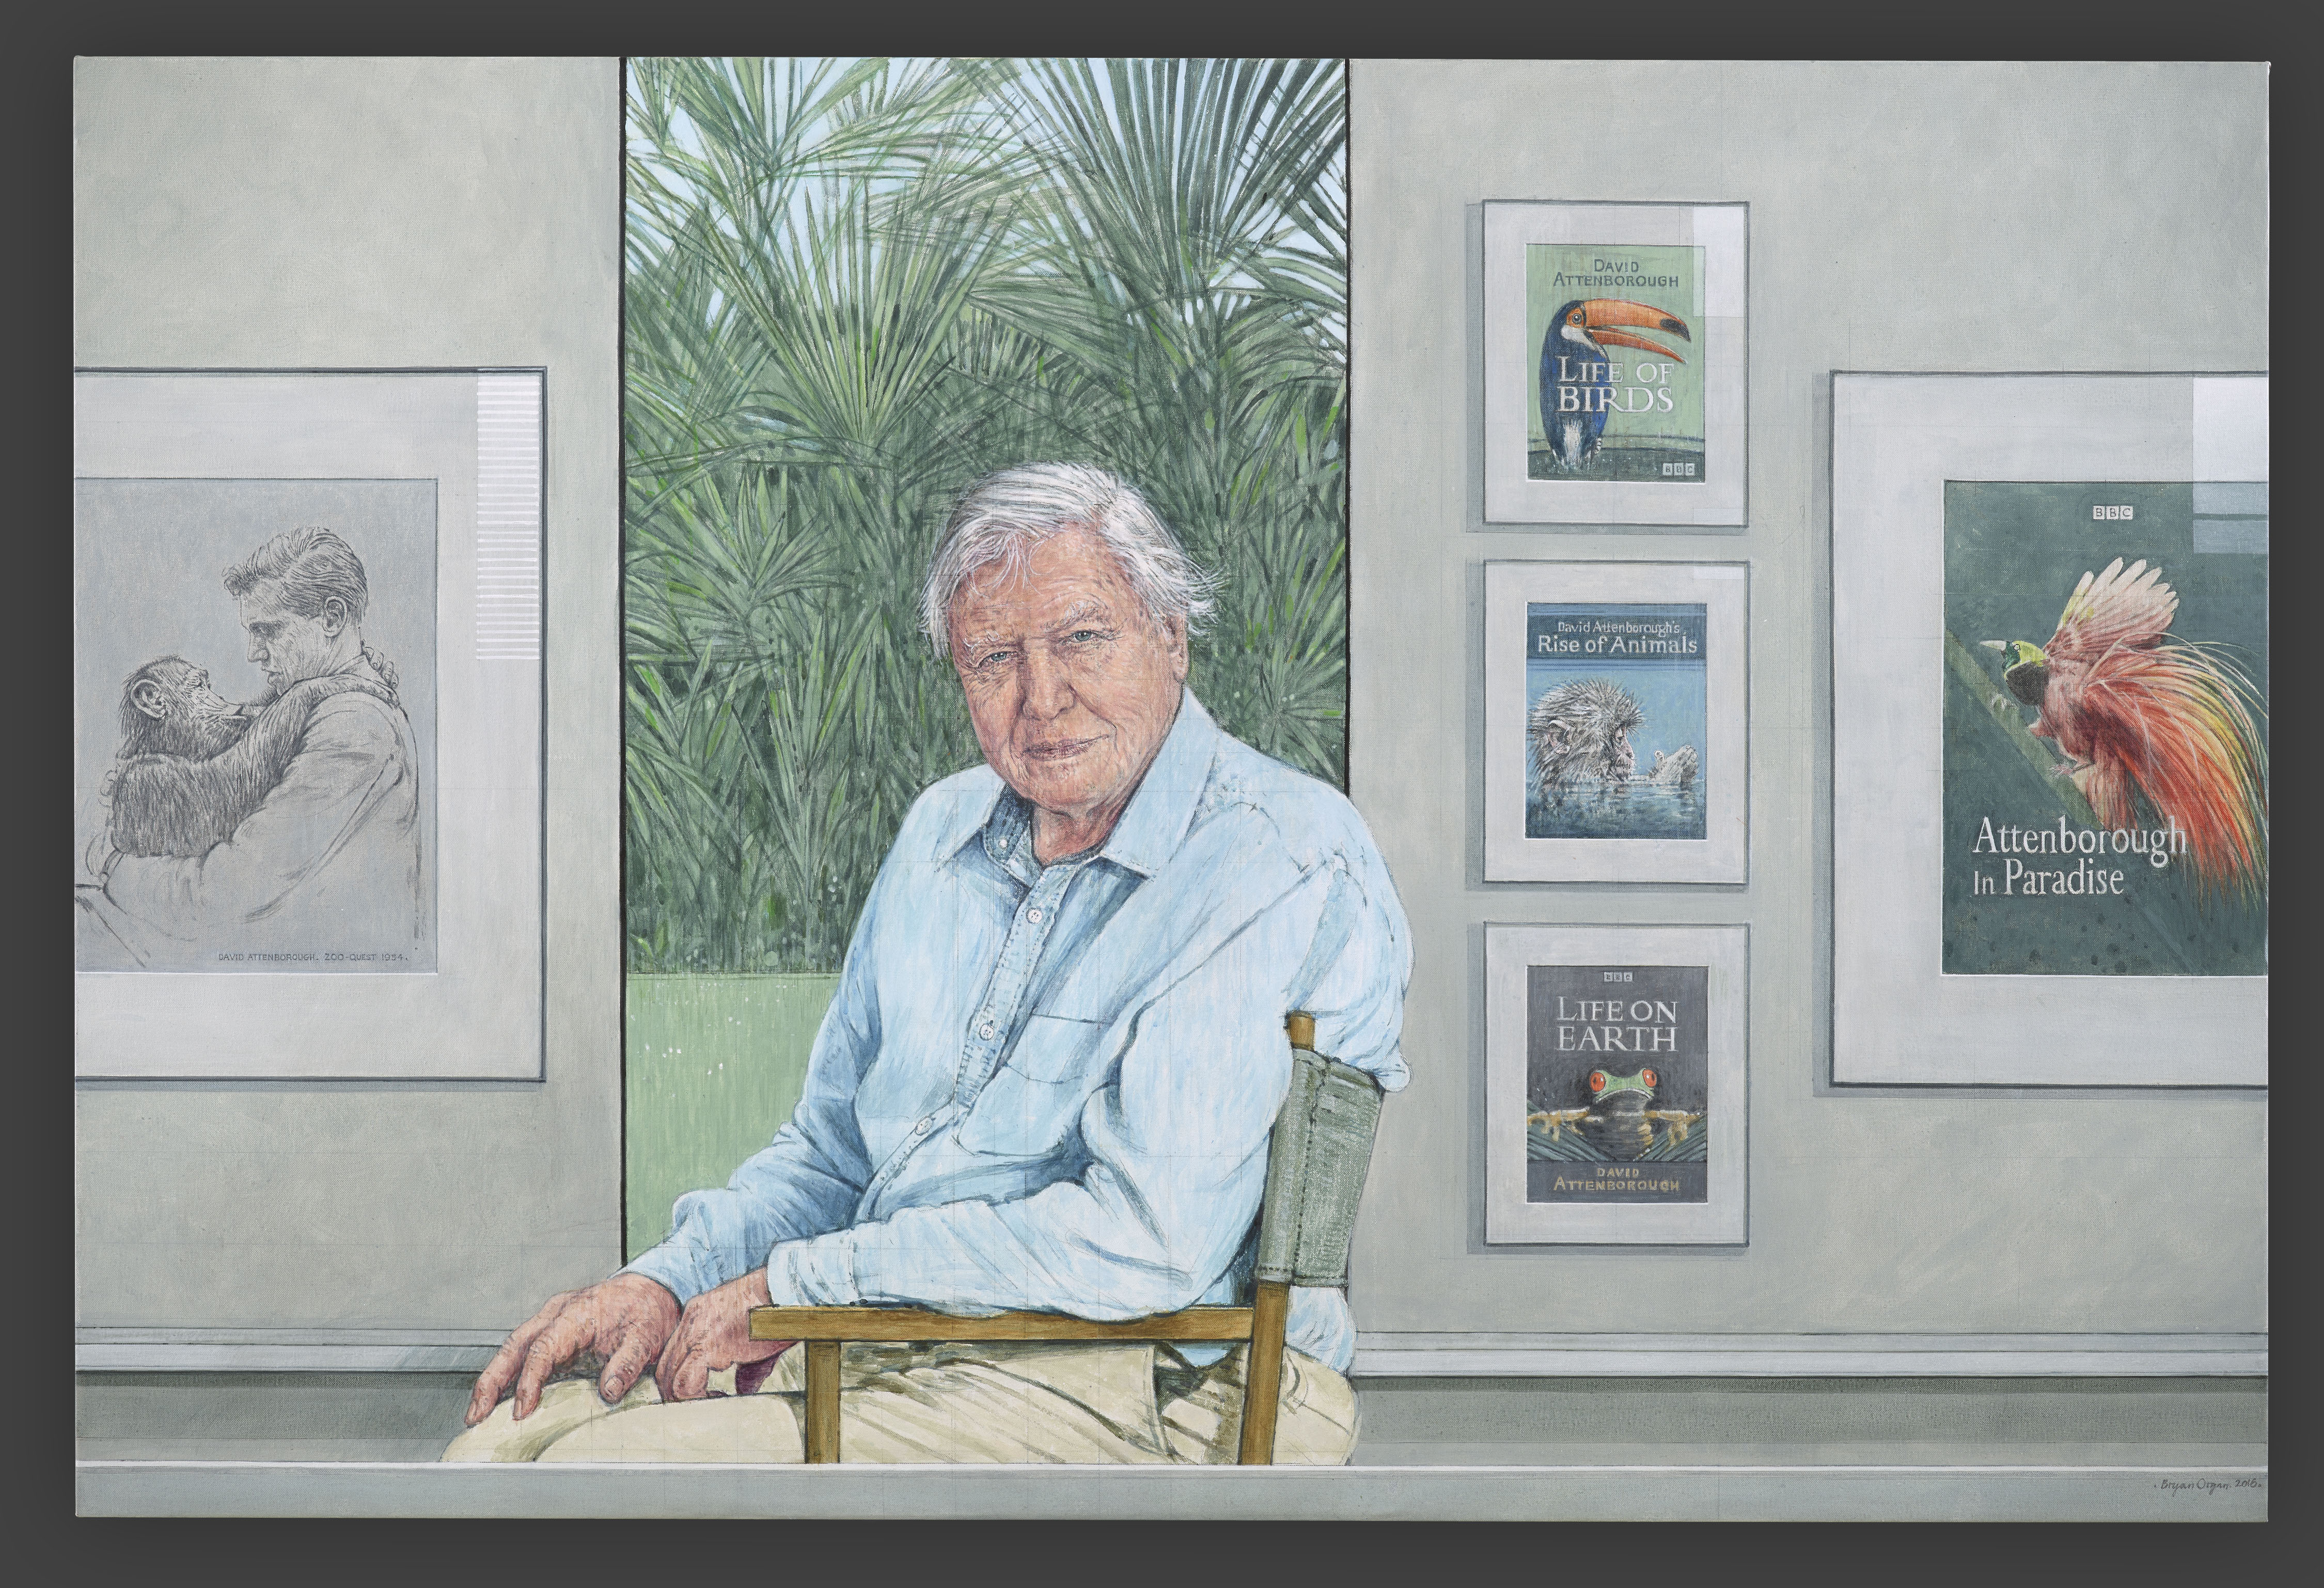 David Attenborough portrait by Bryan Organ